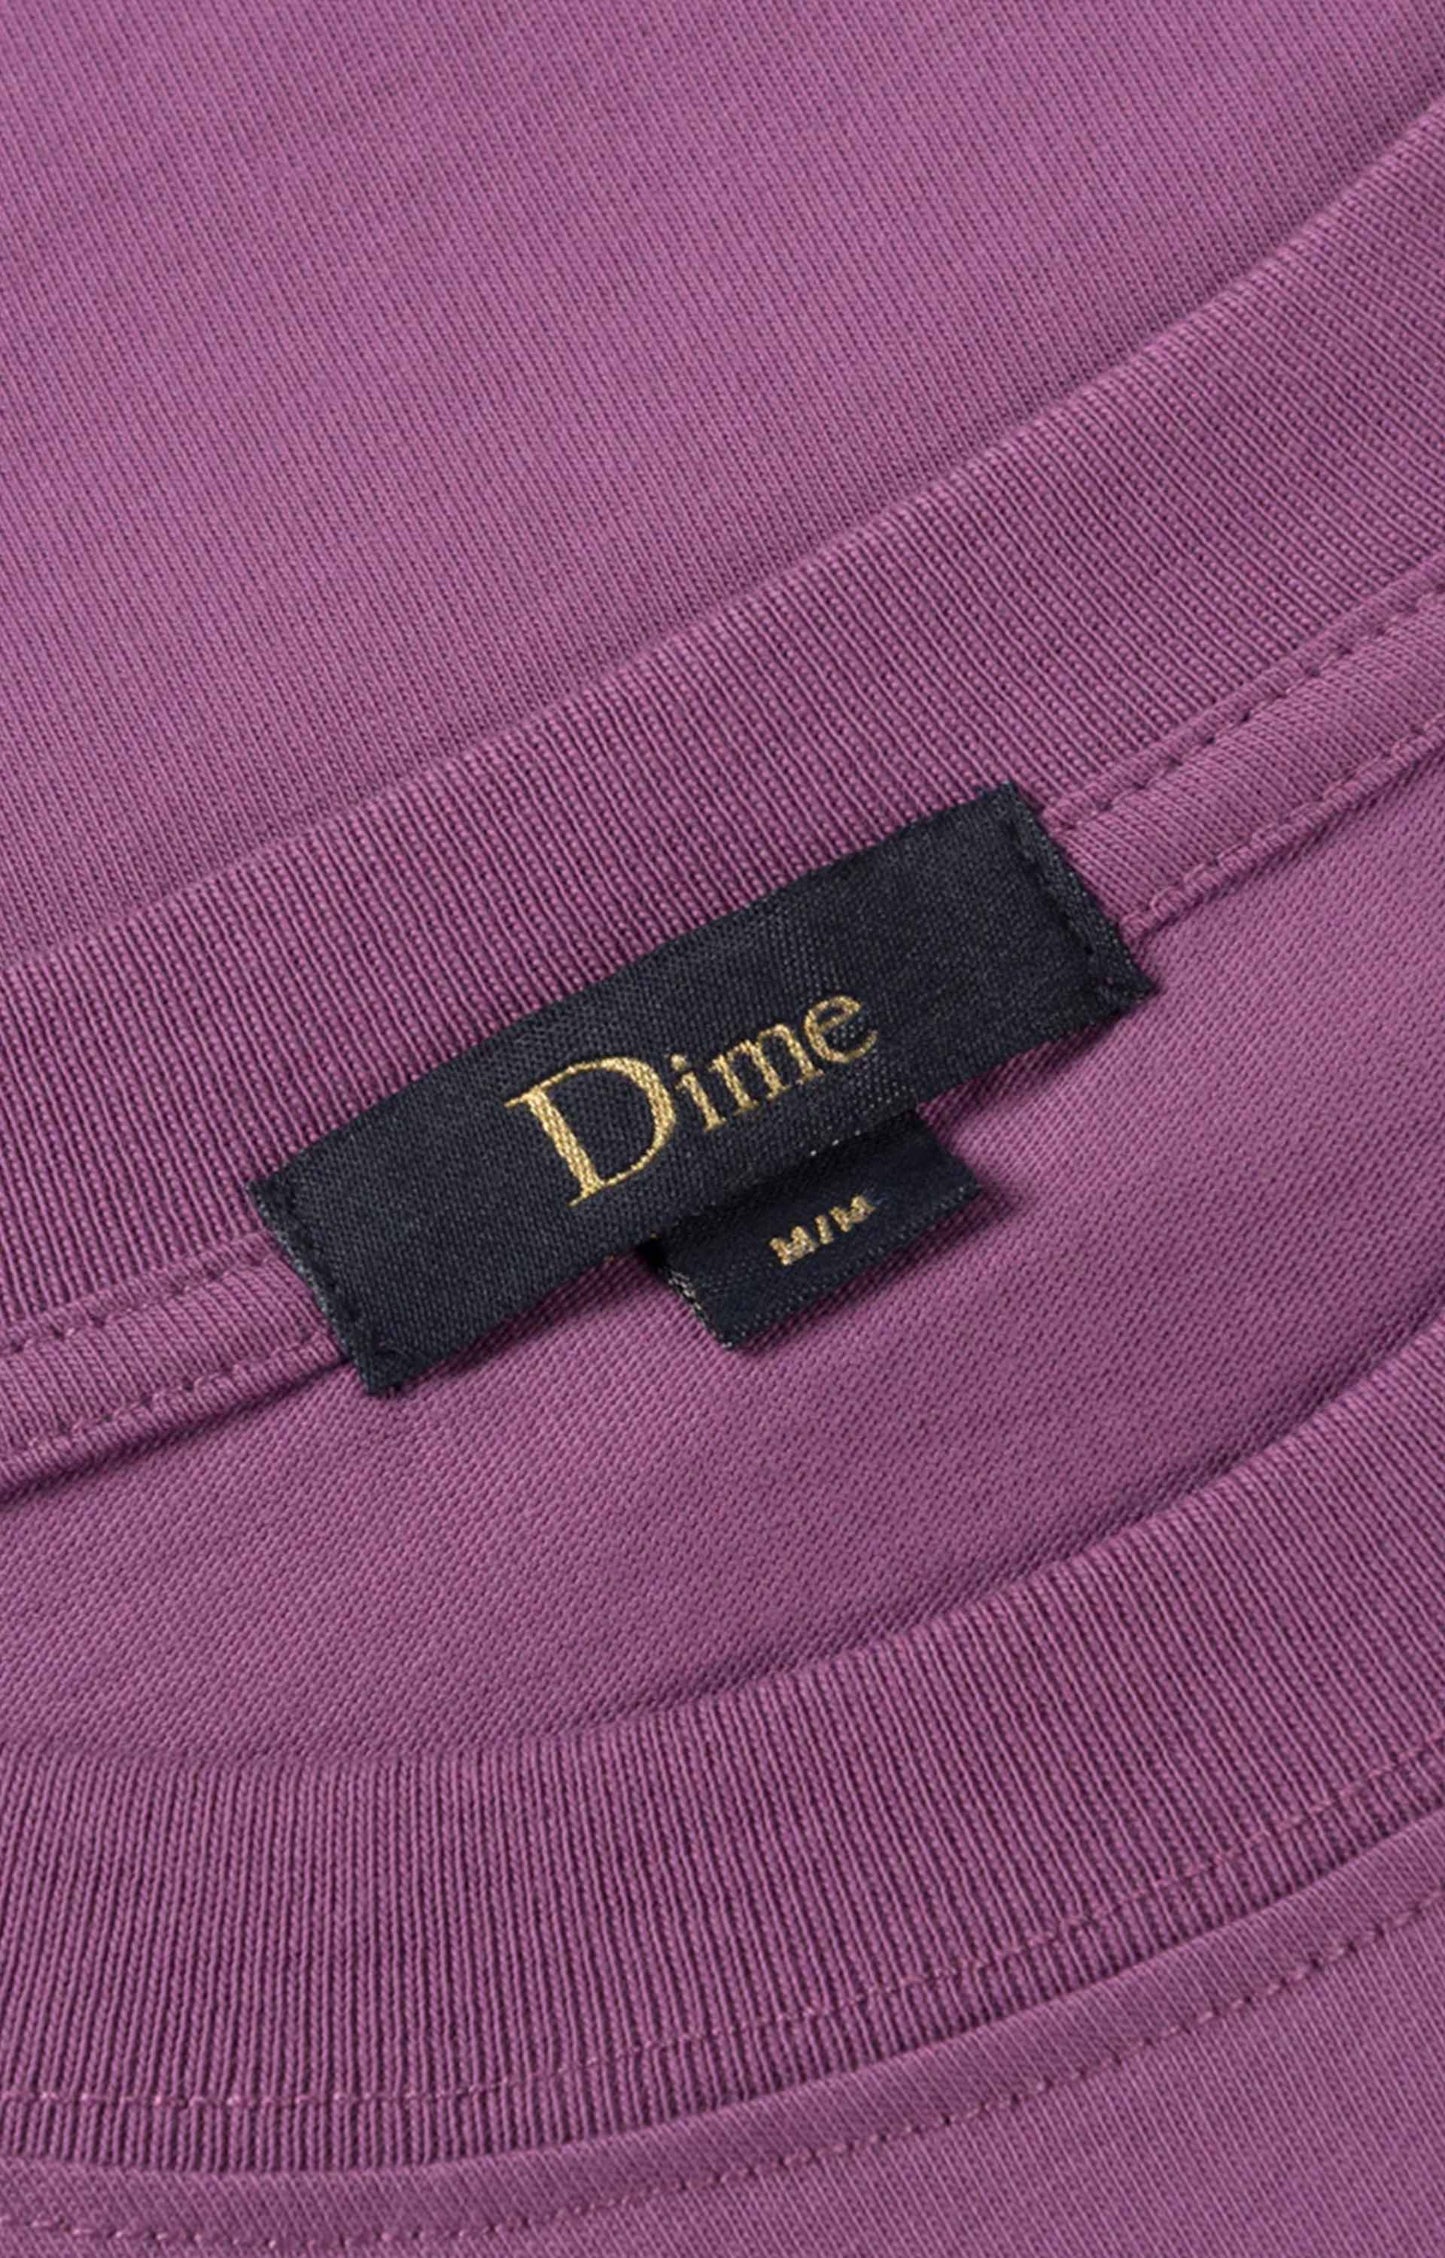 Dime Classic Small Logo T-Shirt, Violet